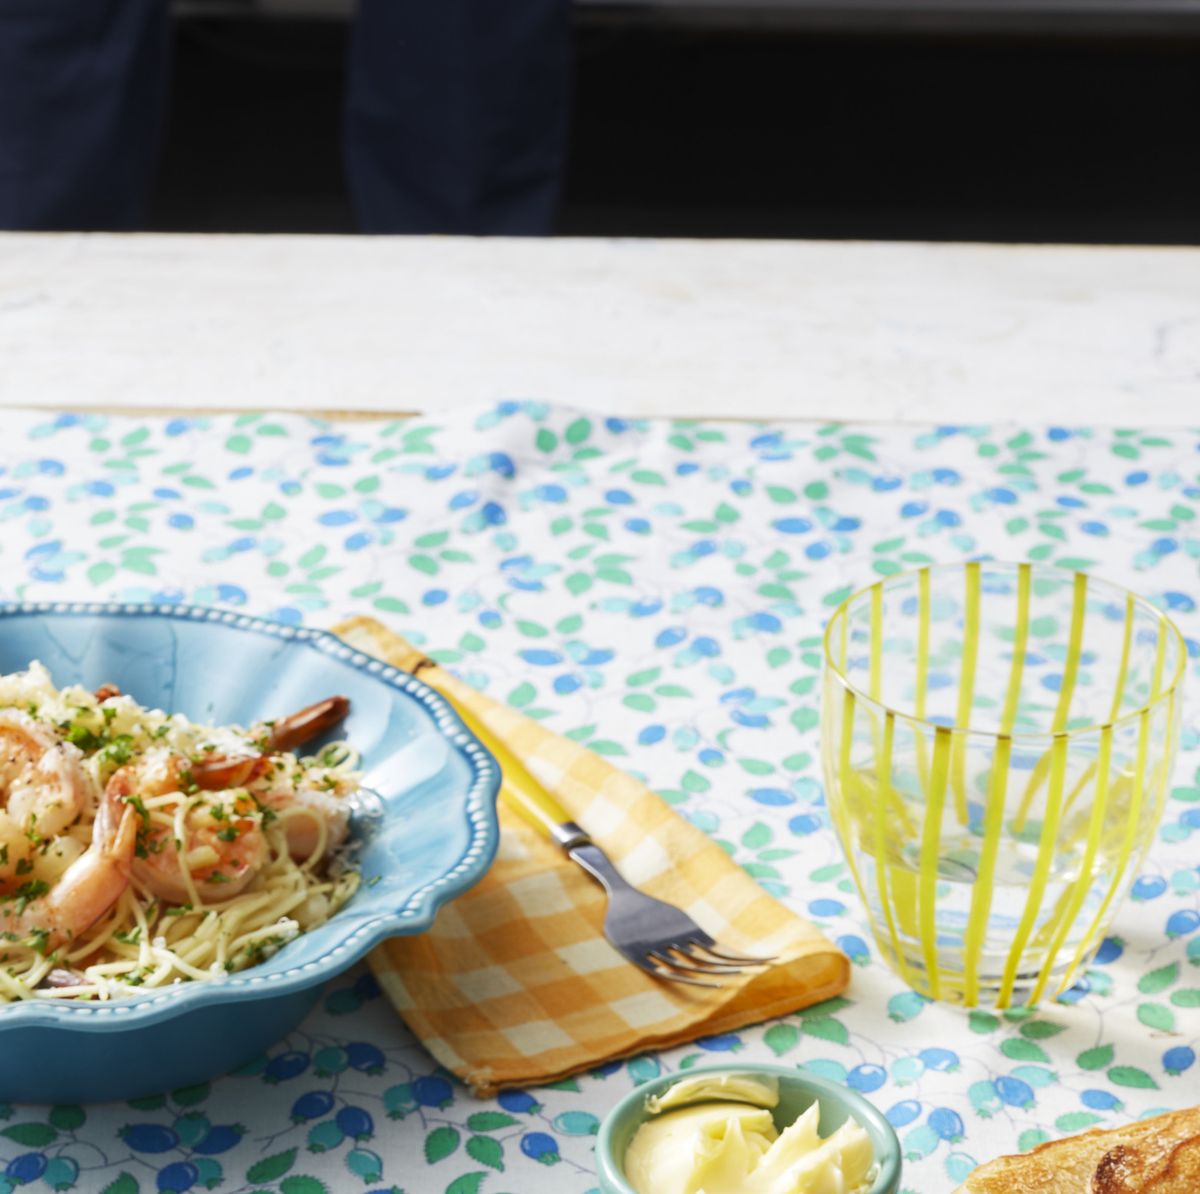 Lemon-Parmesan Angel Hair Pasta with Shrimp - Cooking Classy